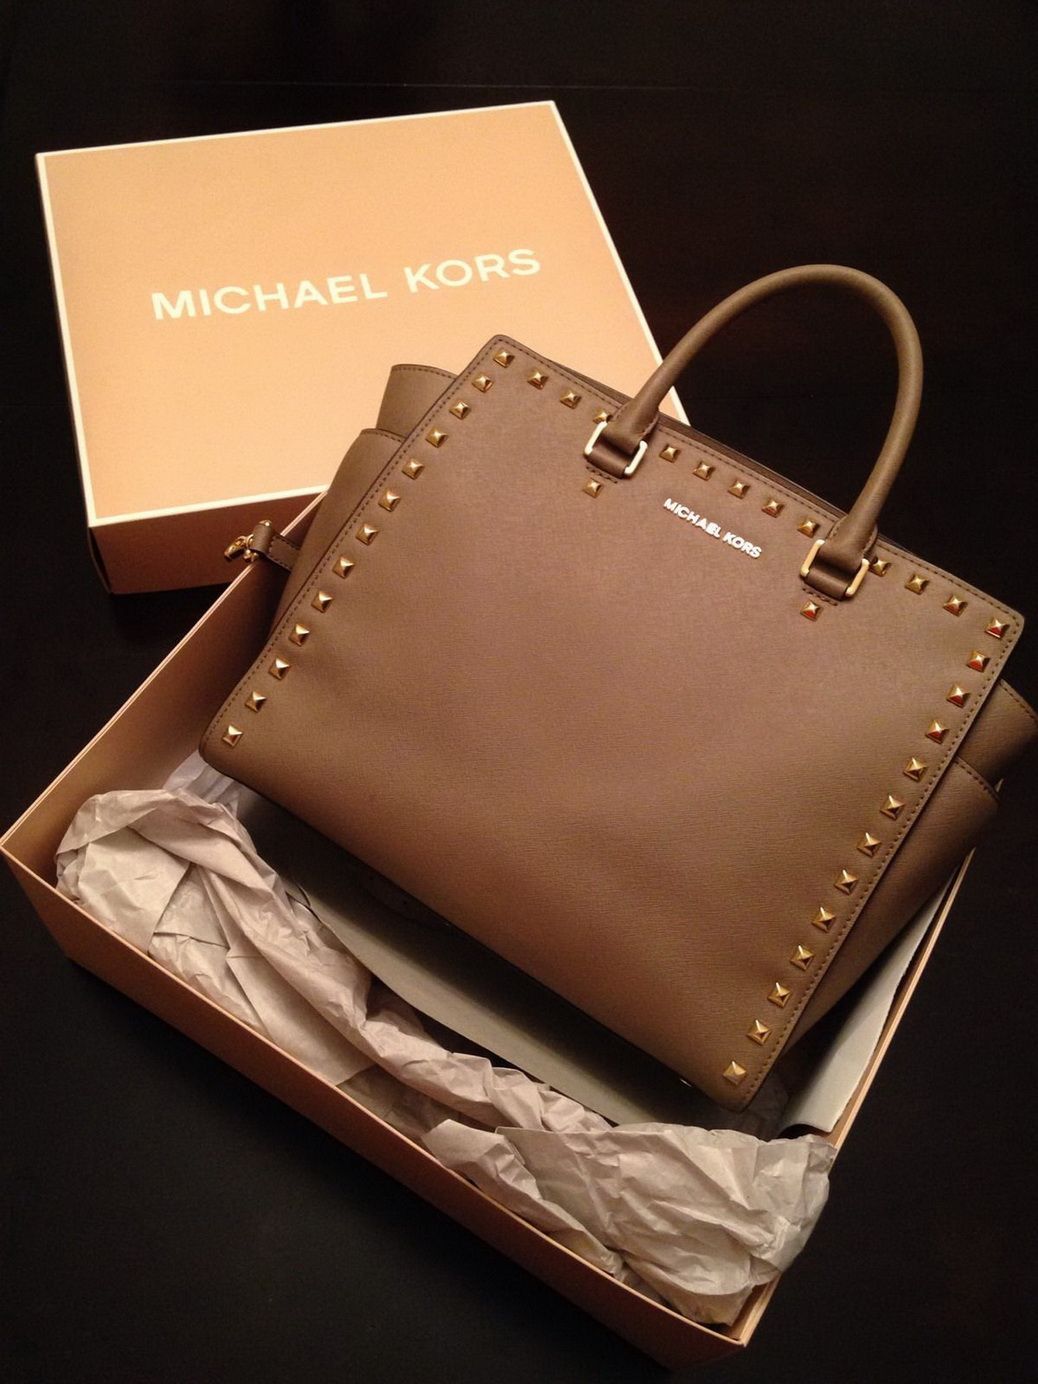 Michael Kors Handbags #Mich